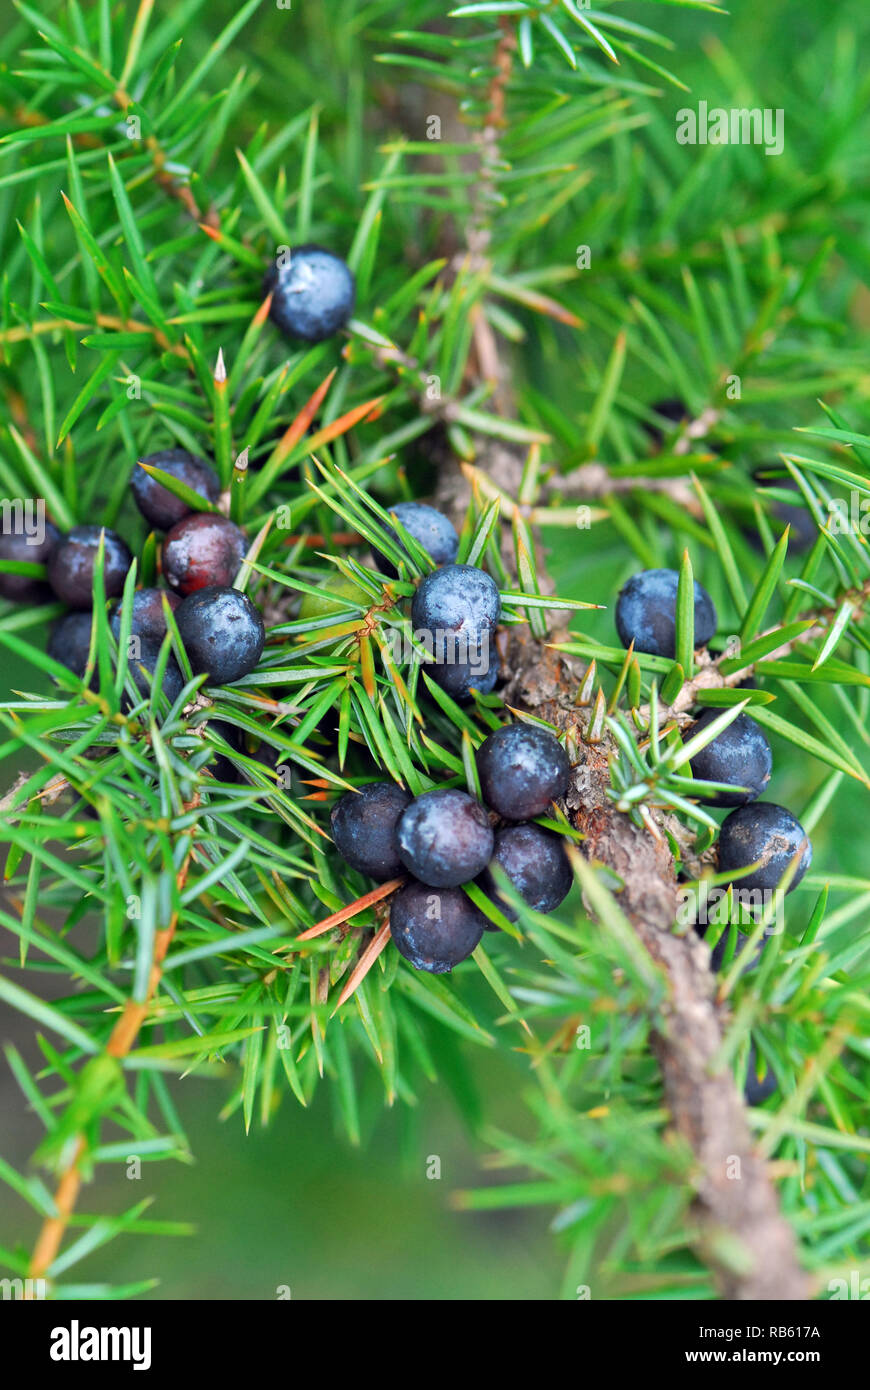 common juniper, Gemeiner Wacholder, Heide-Wacholder, közönséges boróka, Juniperus communis, Hungary, Magyarország, Europe Stock Photo